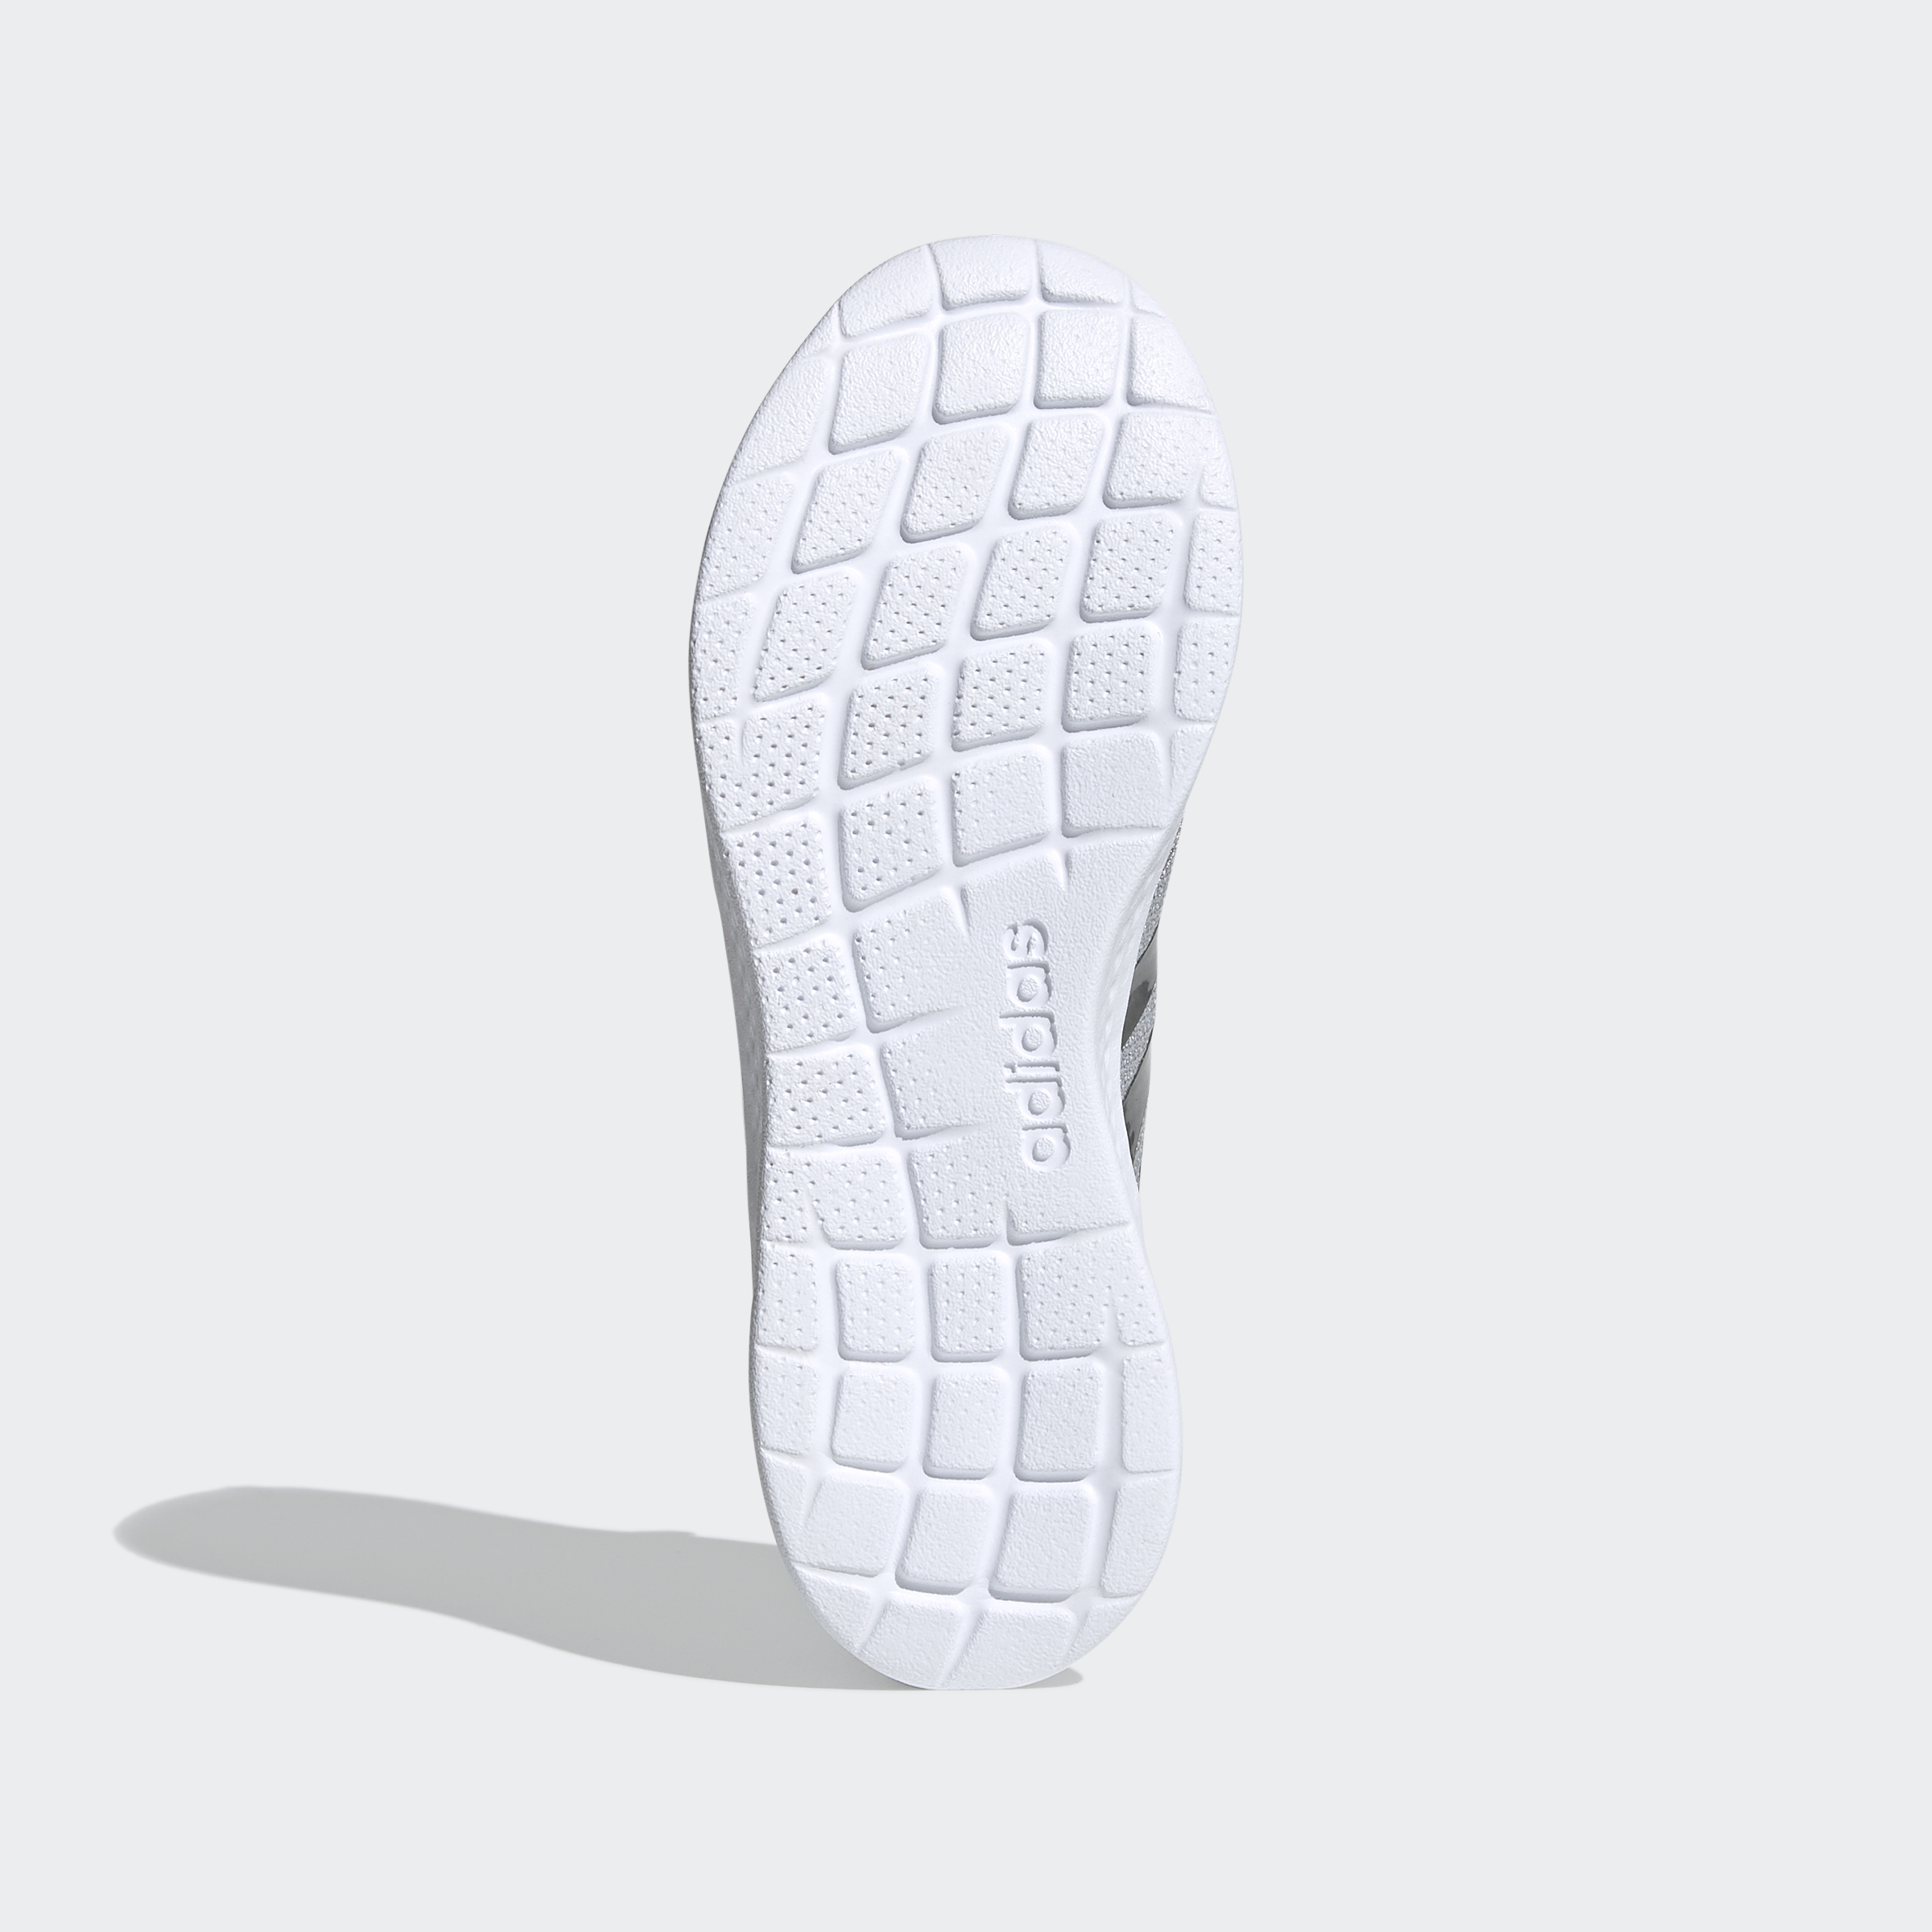 adidas Sportswear AU Women Grey Two Puremotion Sneakers